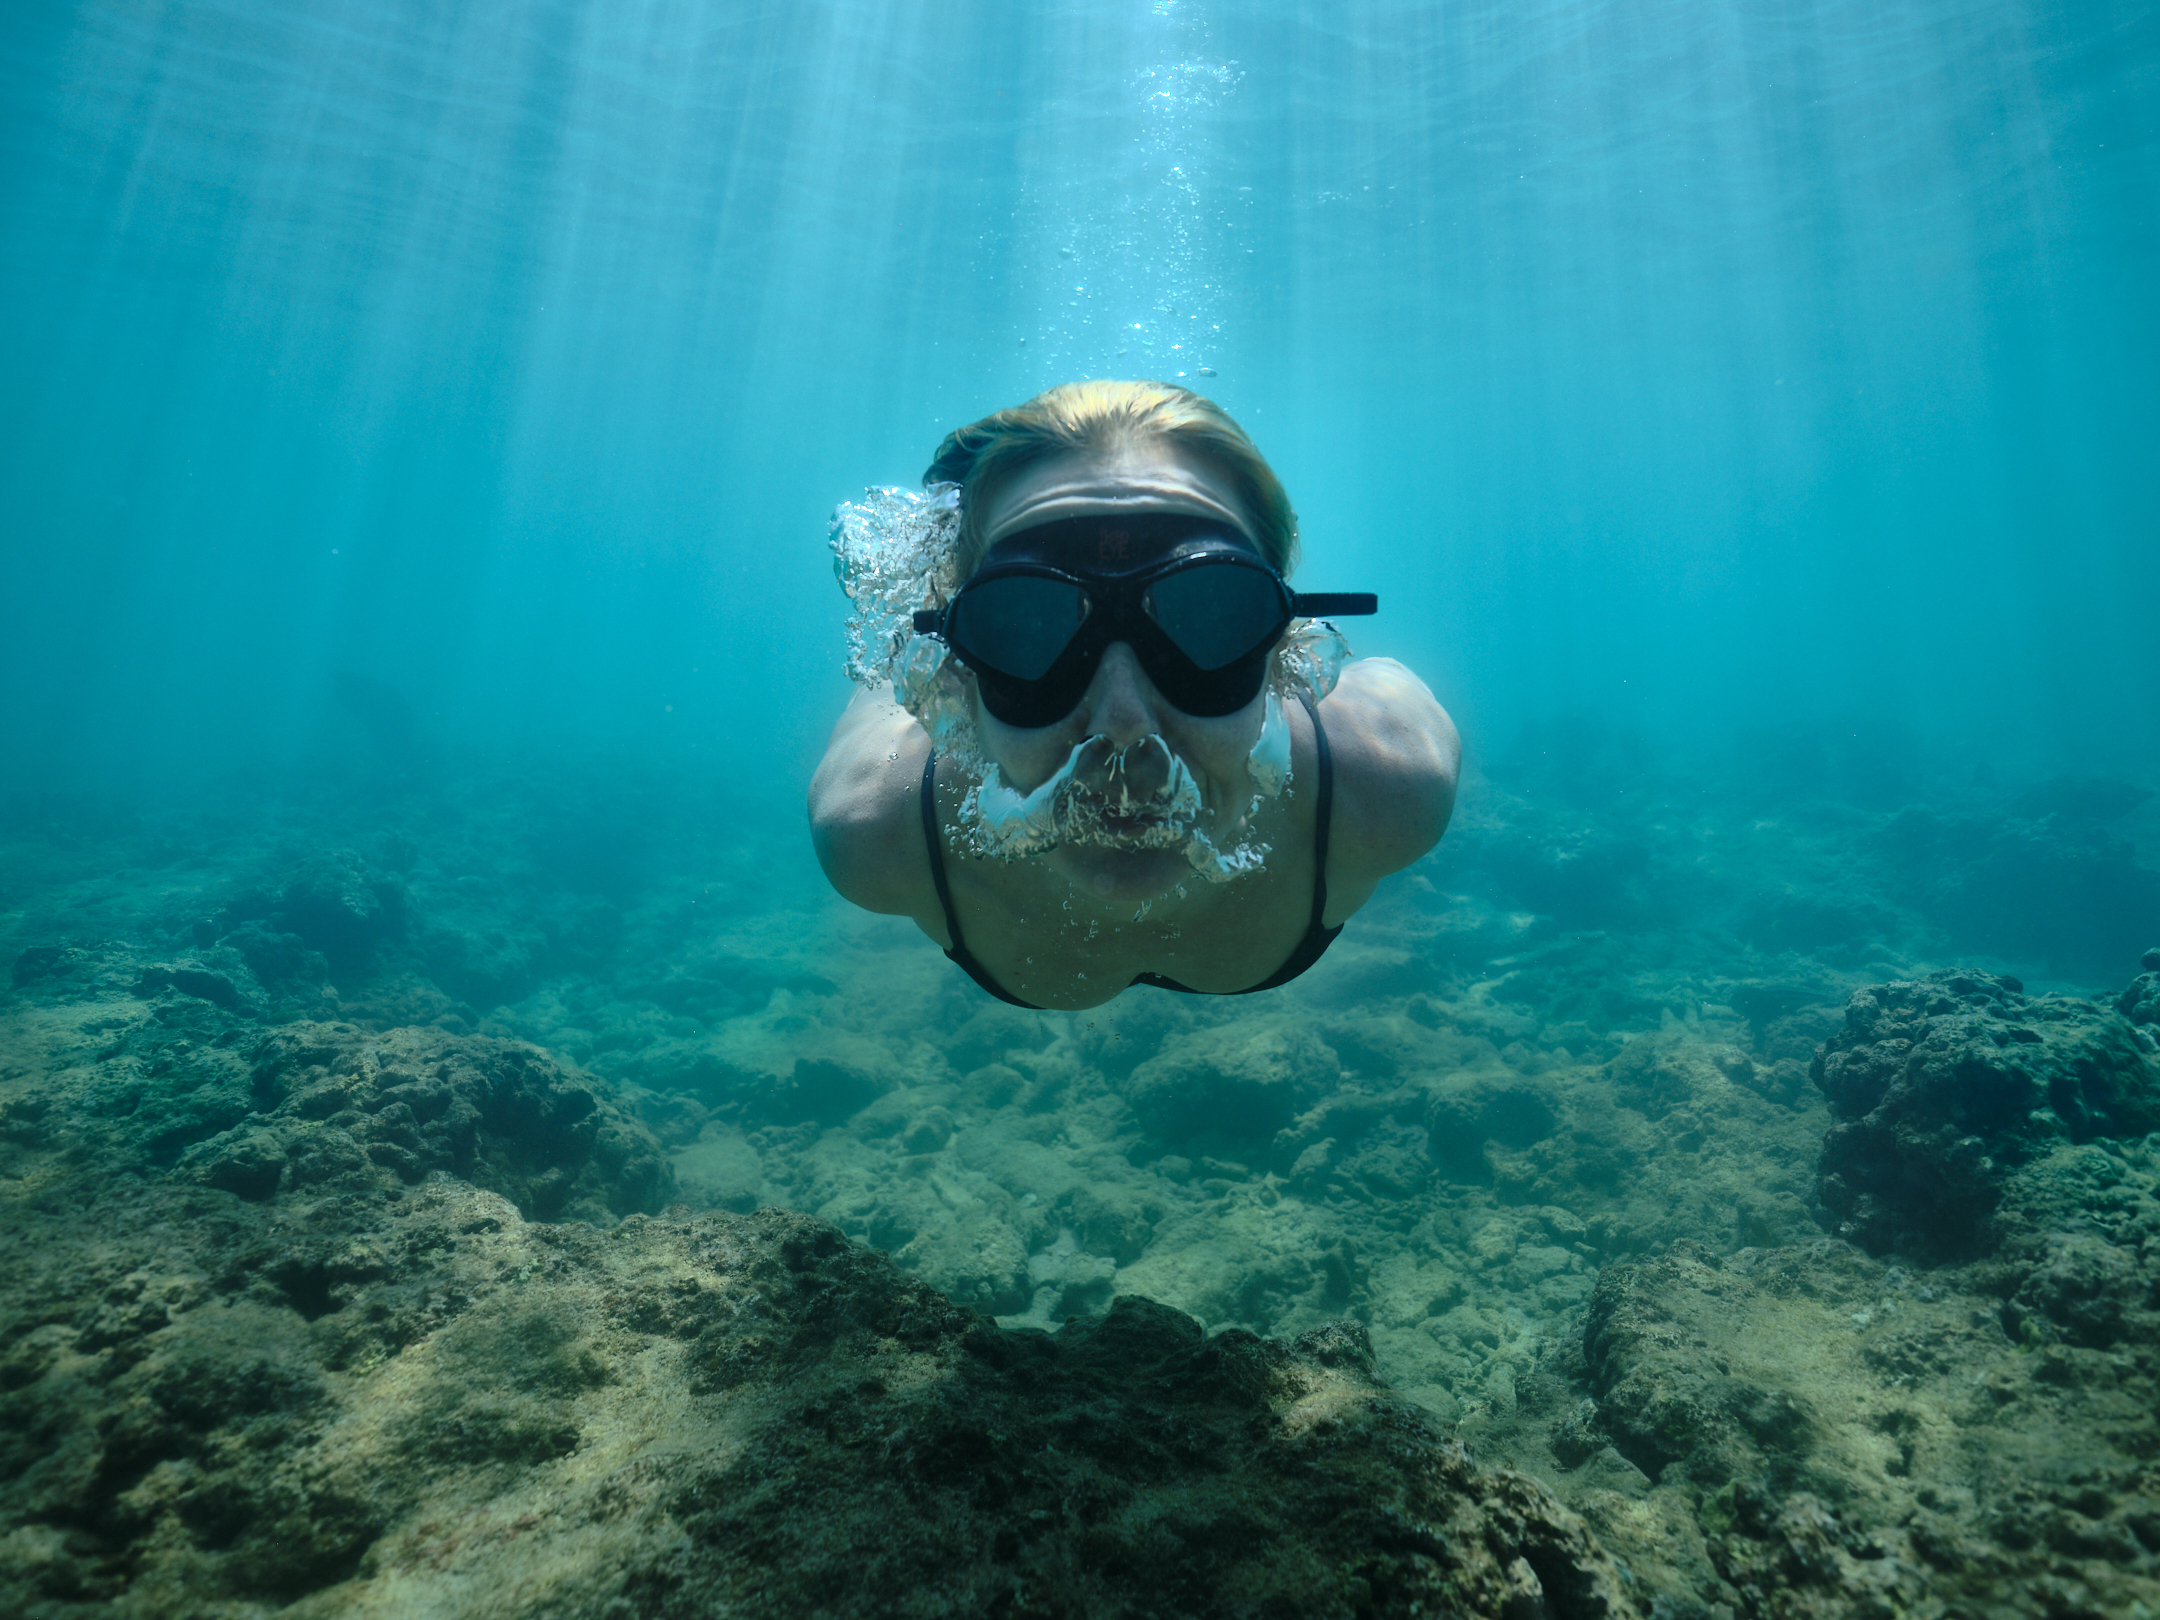 Person diving swimming towards camera